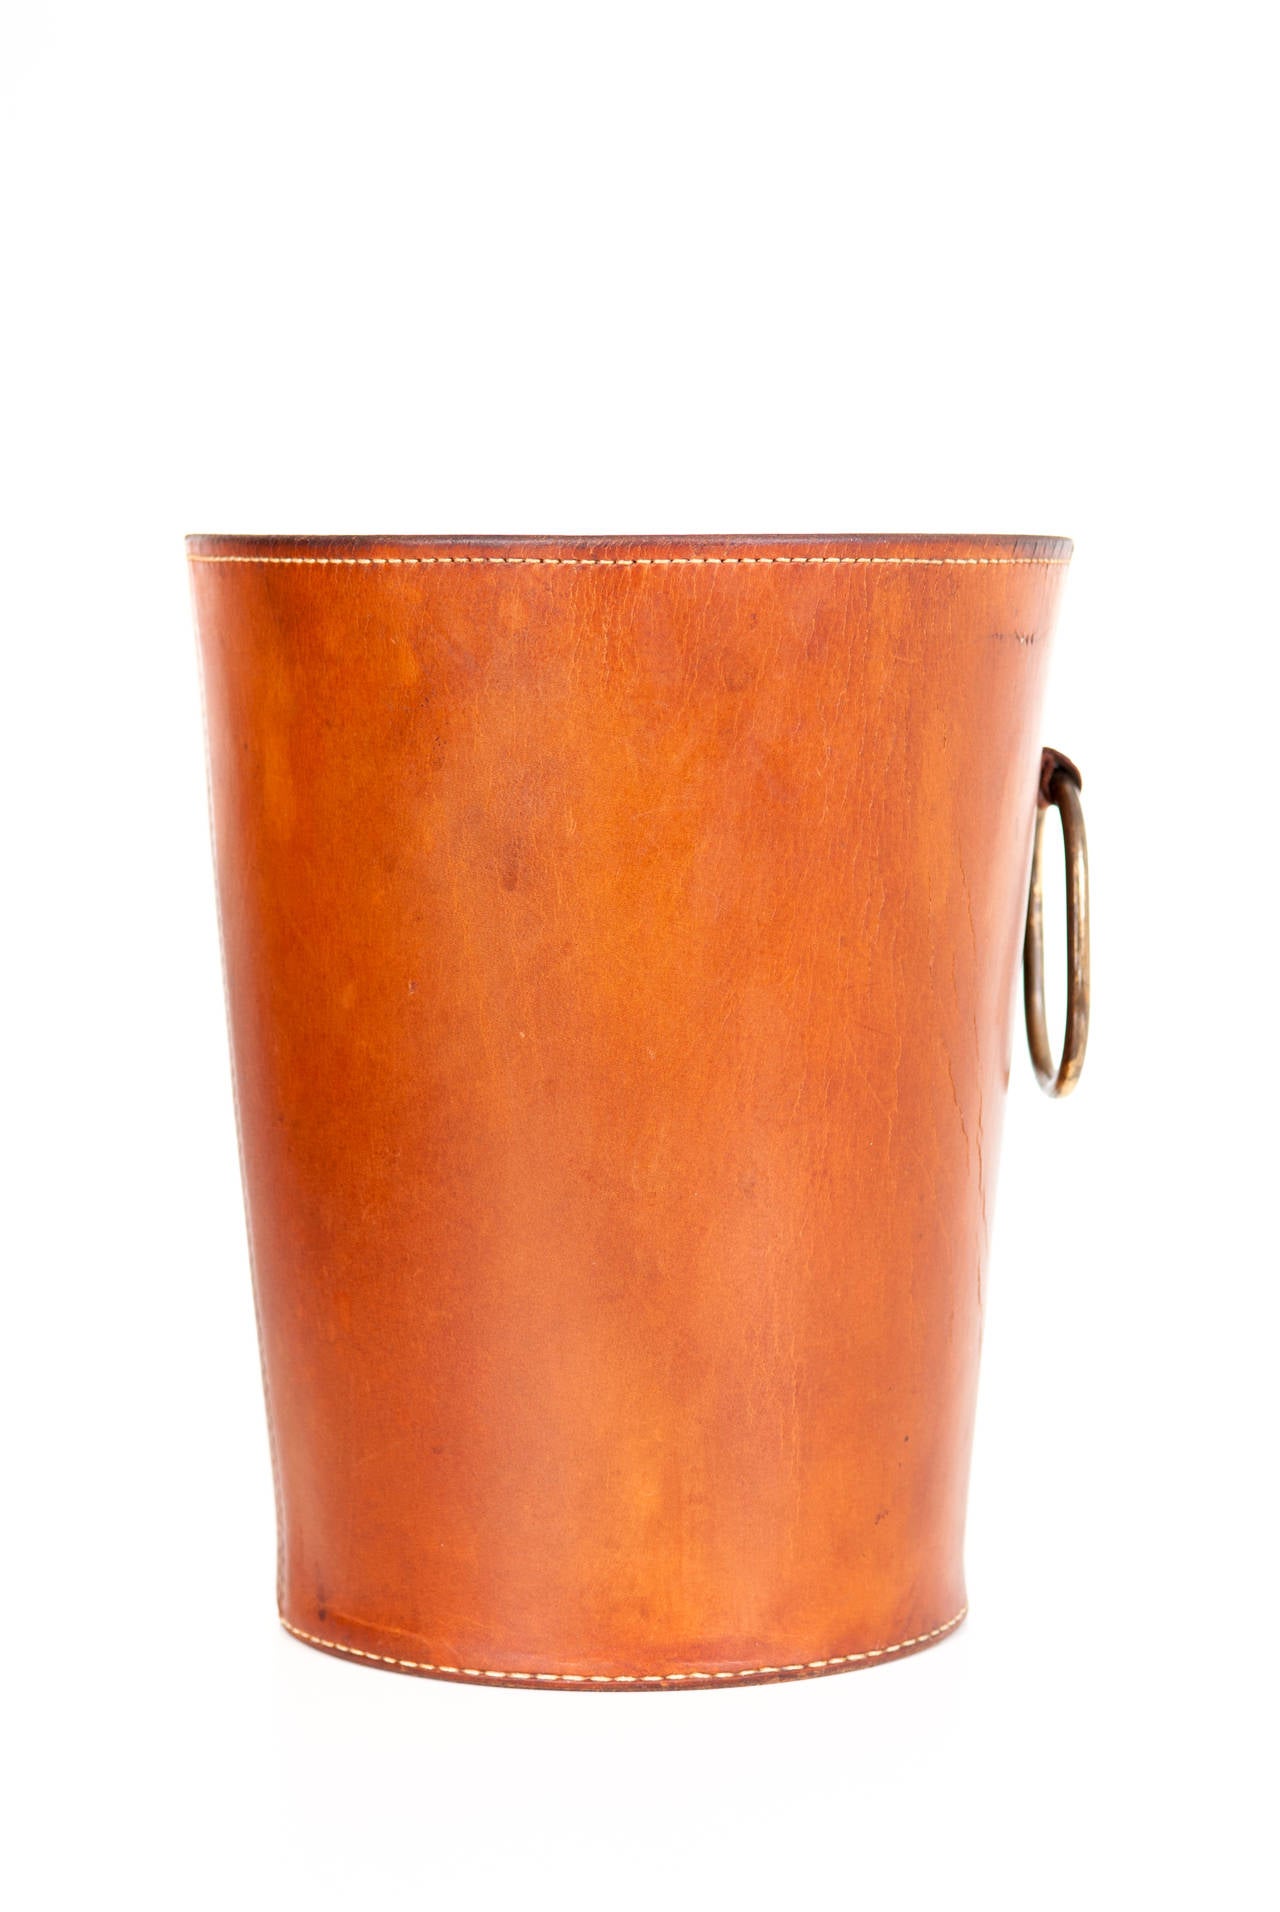 Carl Auböck 

Waste paper bin in original cognac leather from the Vienna based workshop

ca 1950